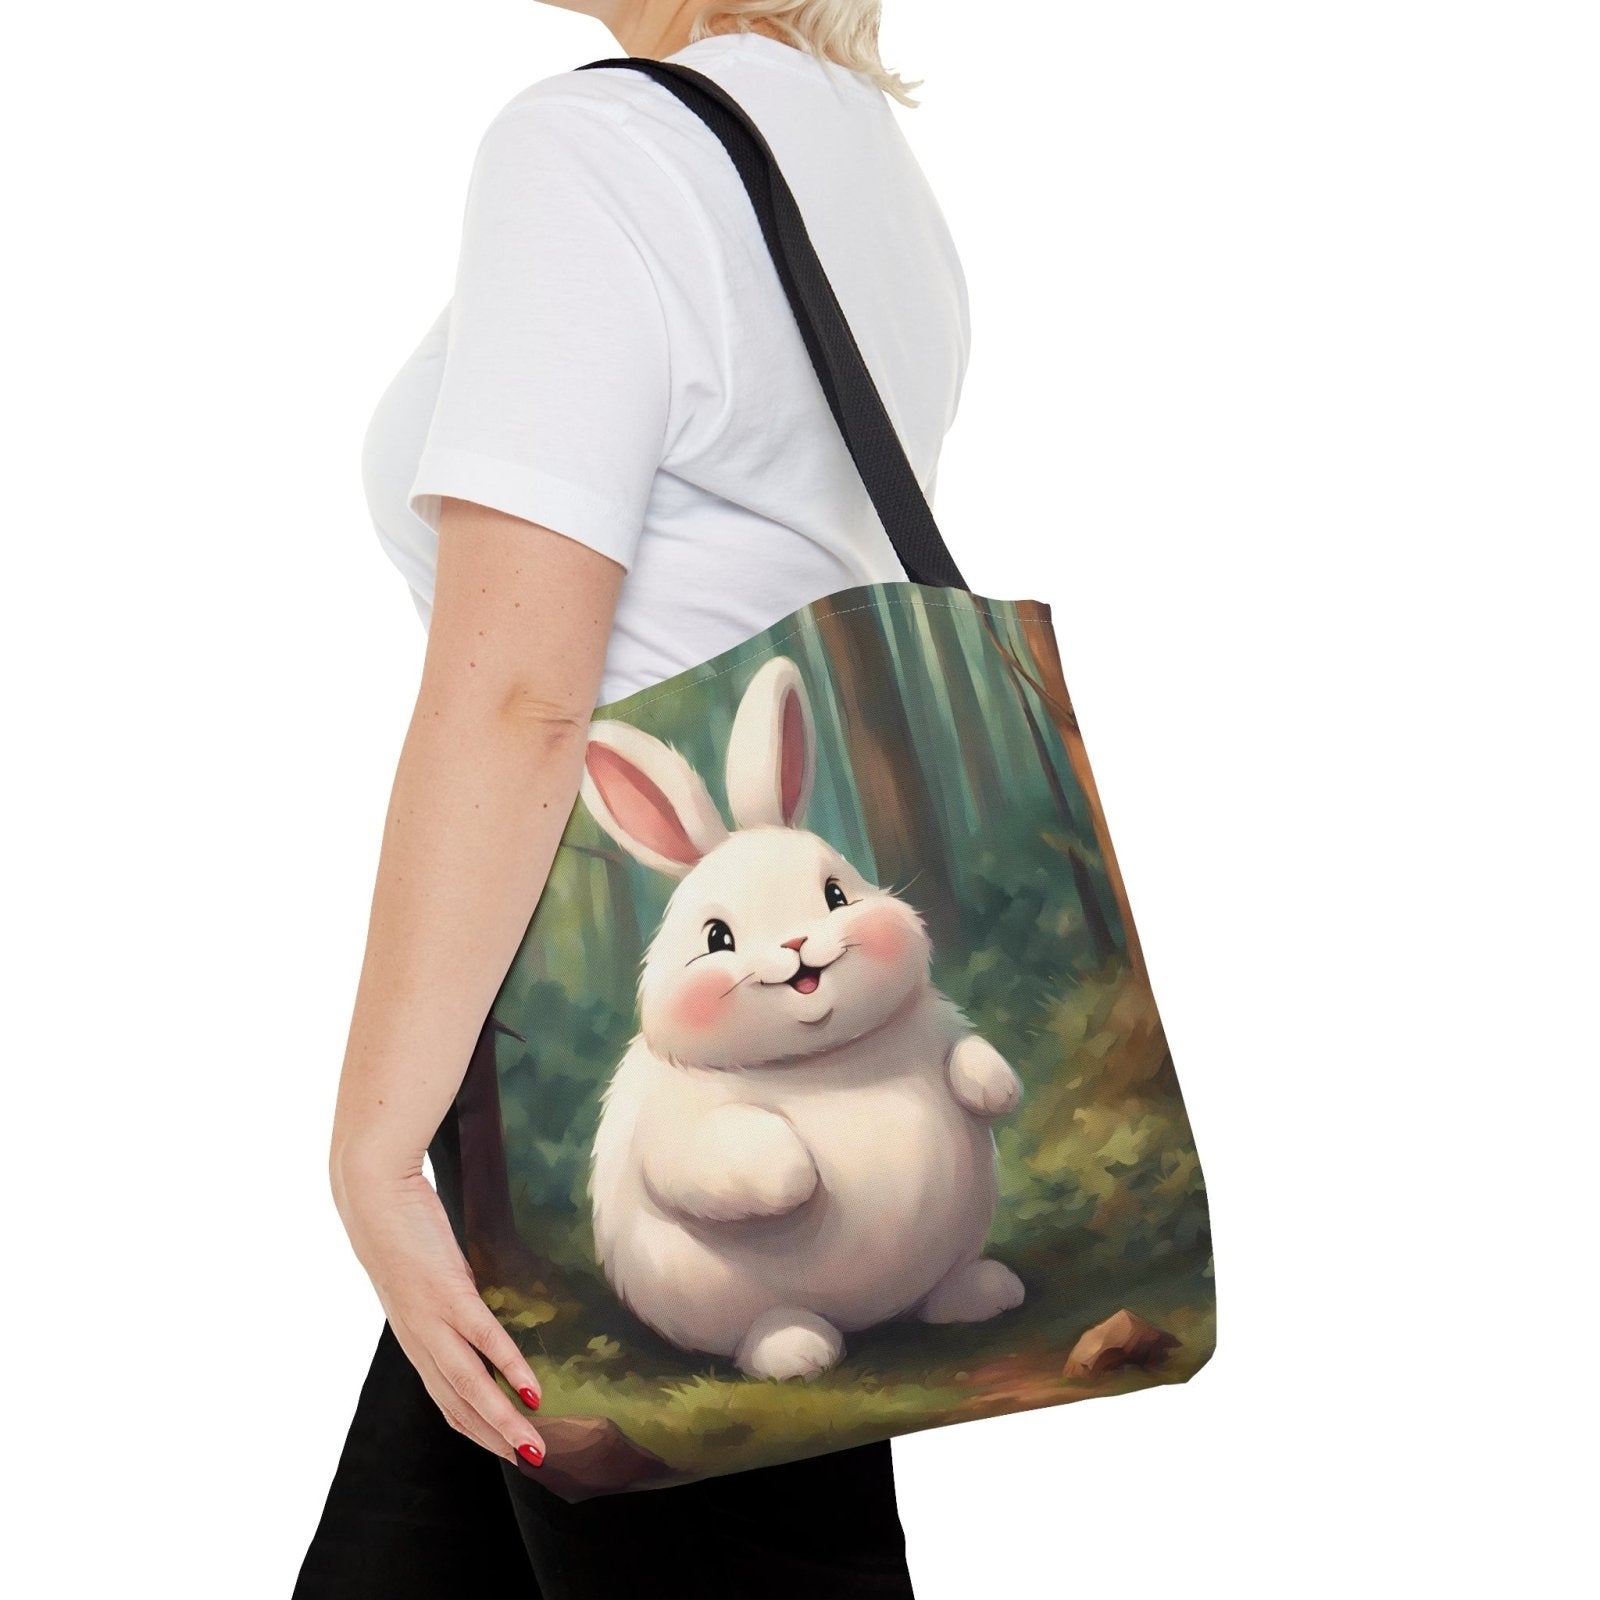 Hop Into Cuteness Tote Bag, adorable rabbit bag, cute bunny accessories - Subtle Blue M